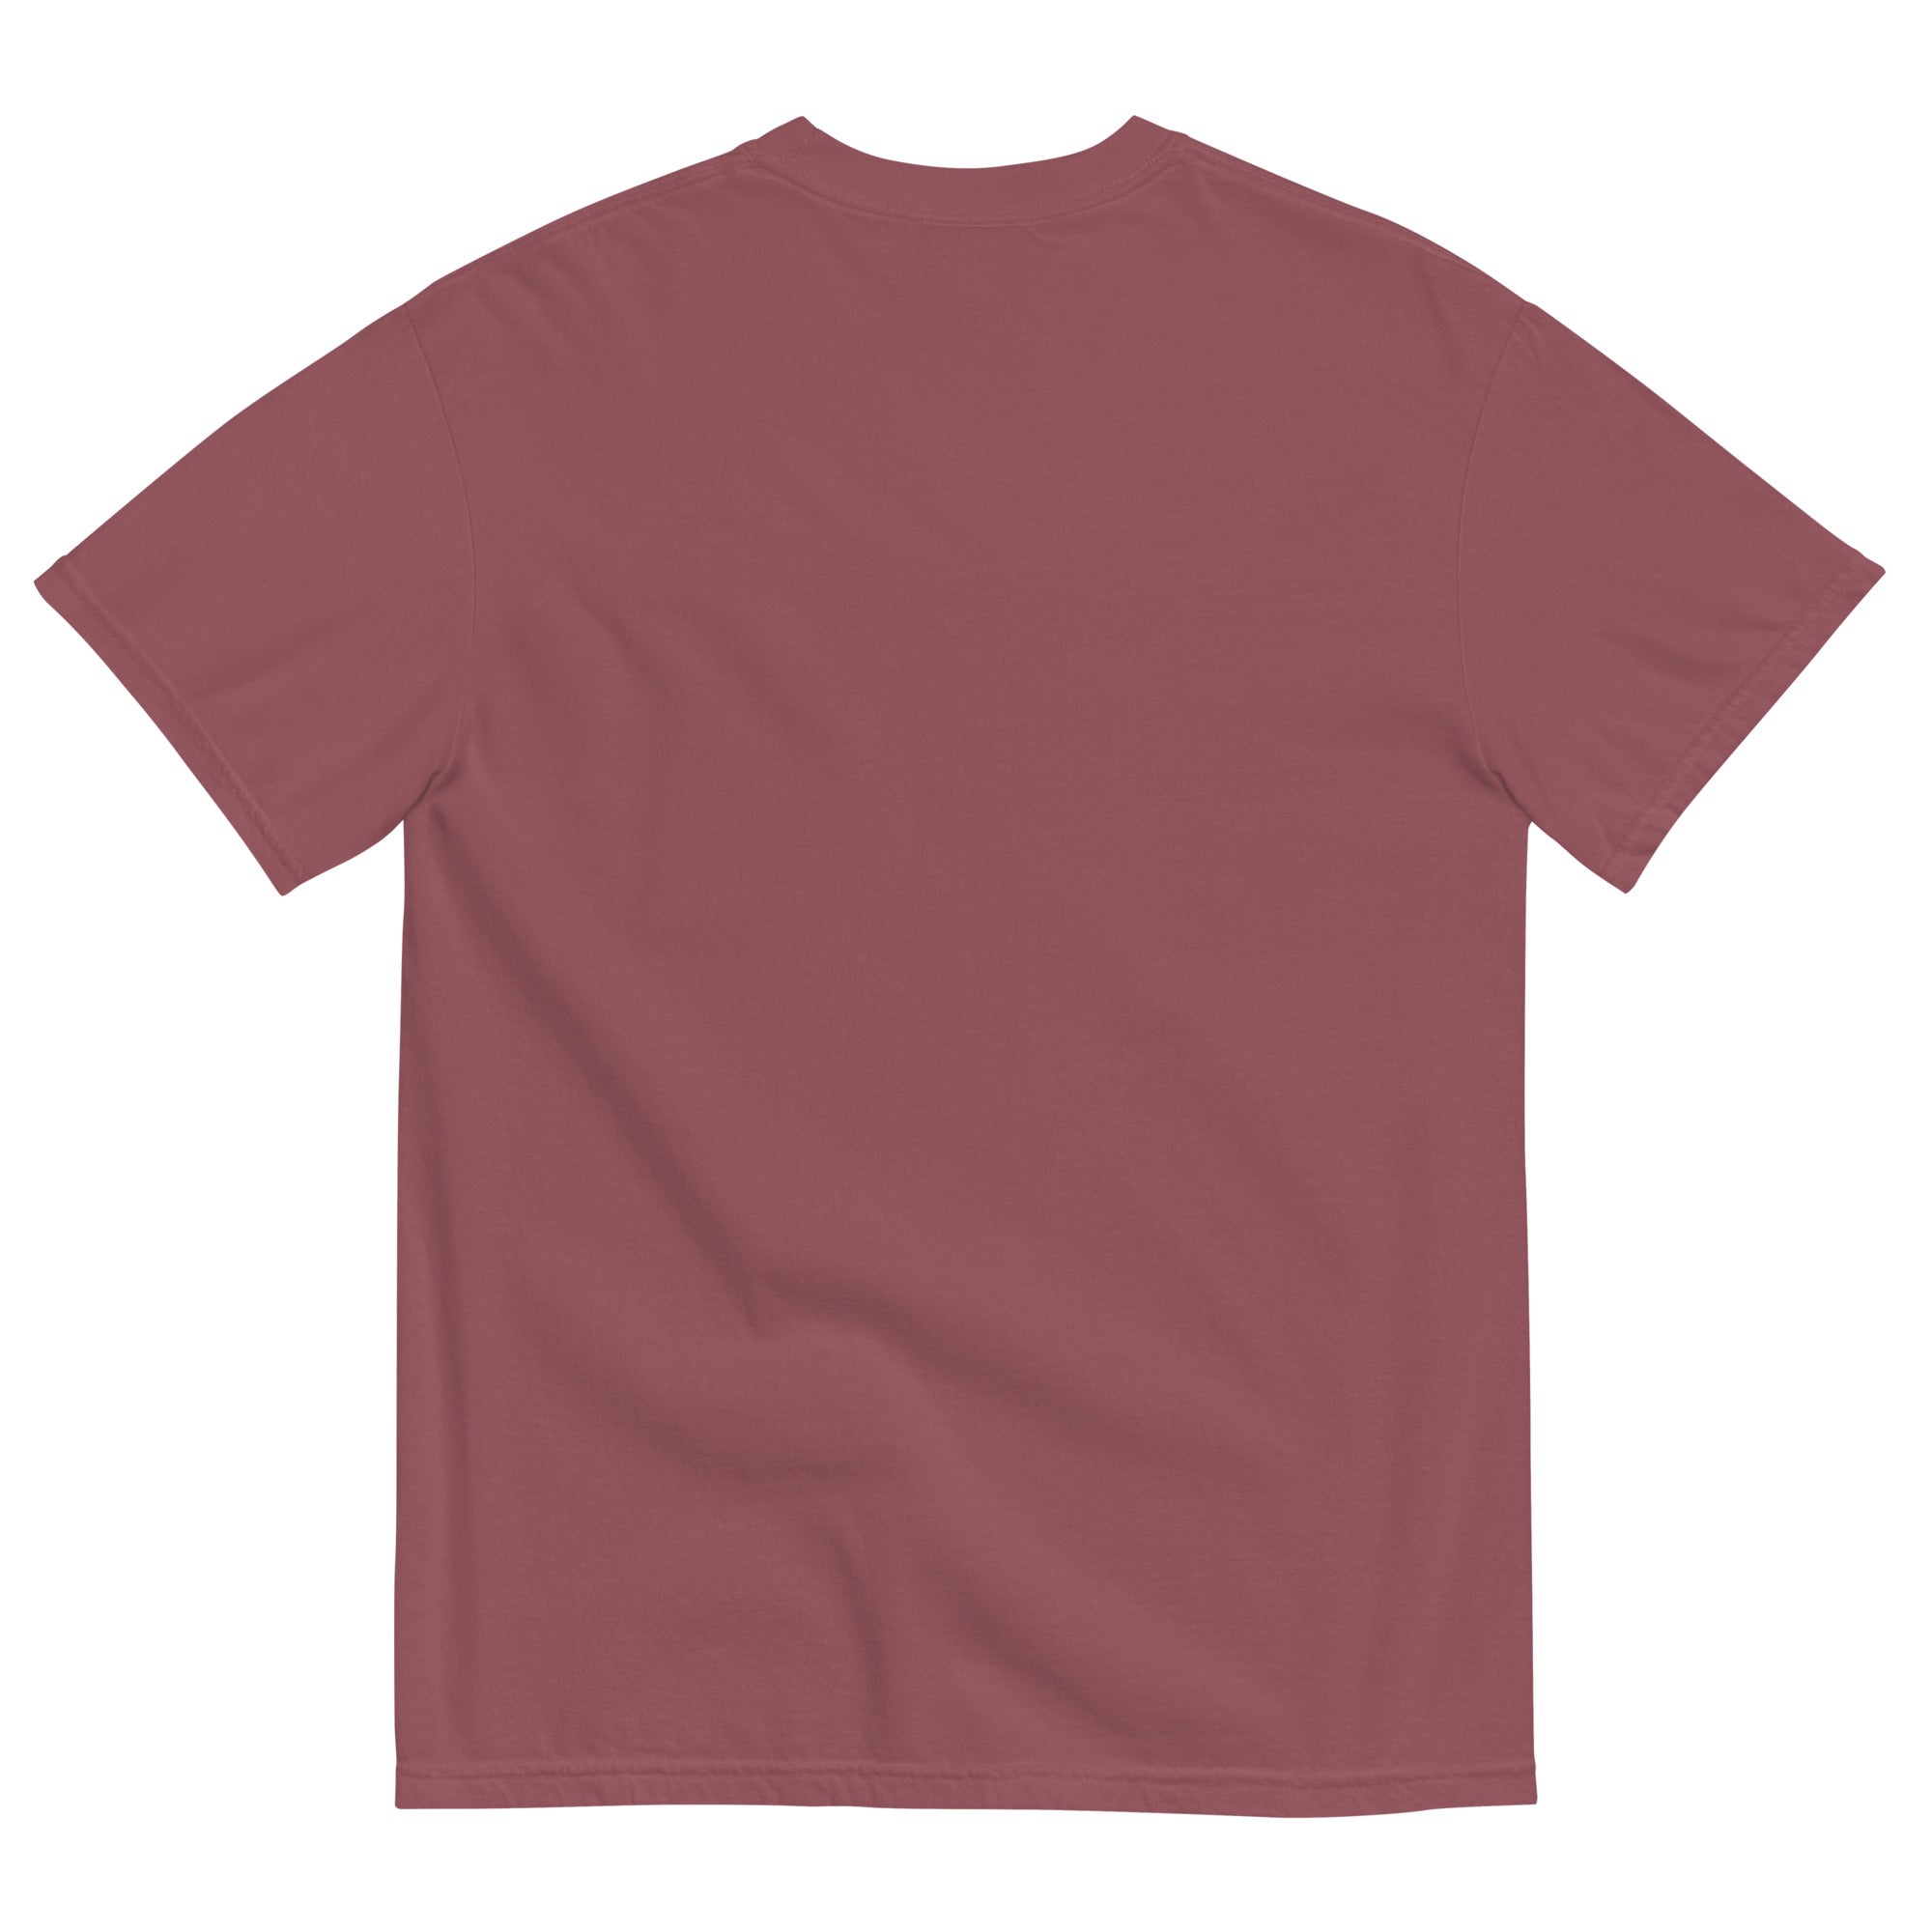 Free Range Live Free Garment-dyed Heavyweight T-Shirt